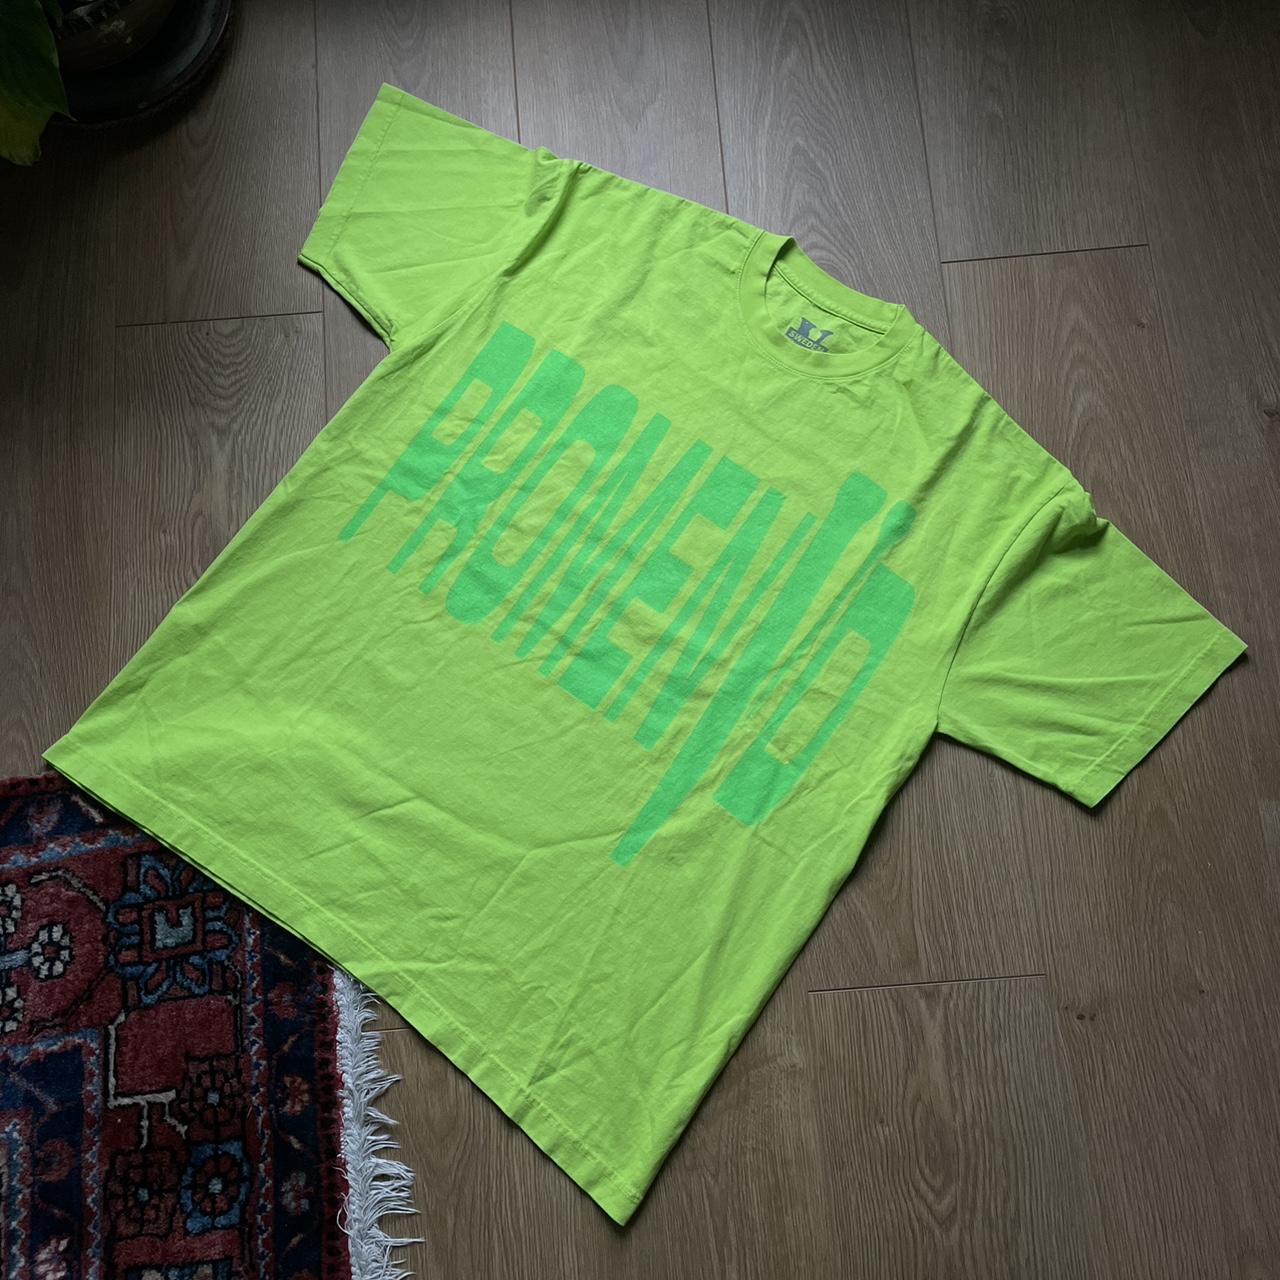 Vlone A$ap Rocky Sweden Tour Stockholm Made in USA Promenad Green Sweatsuit  Sz L